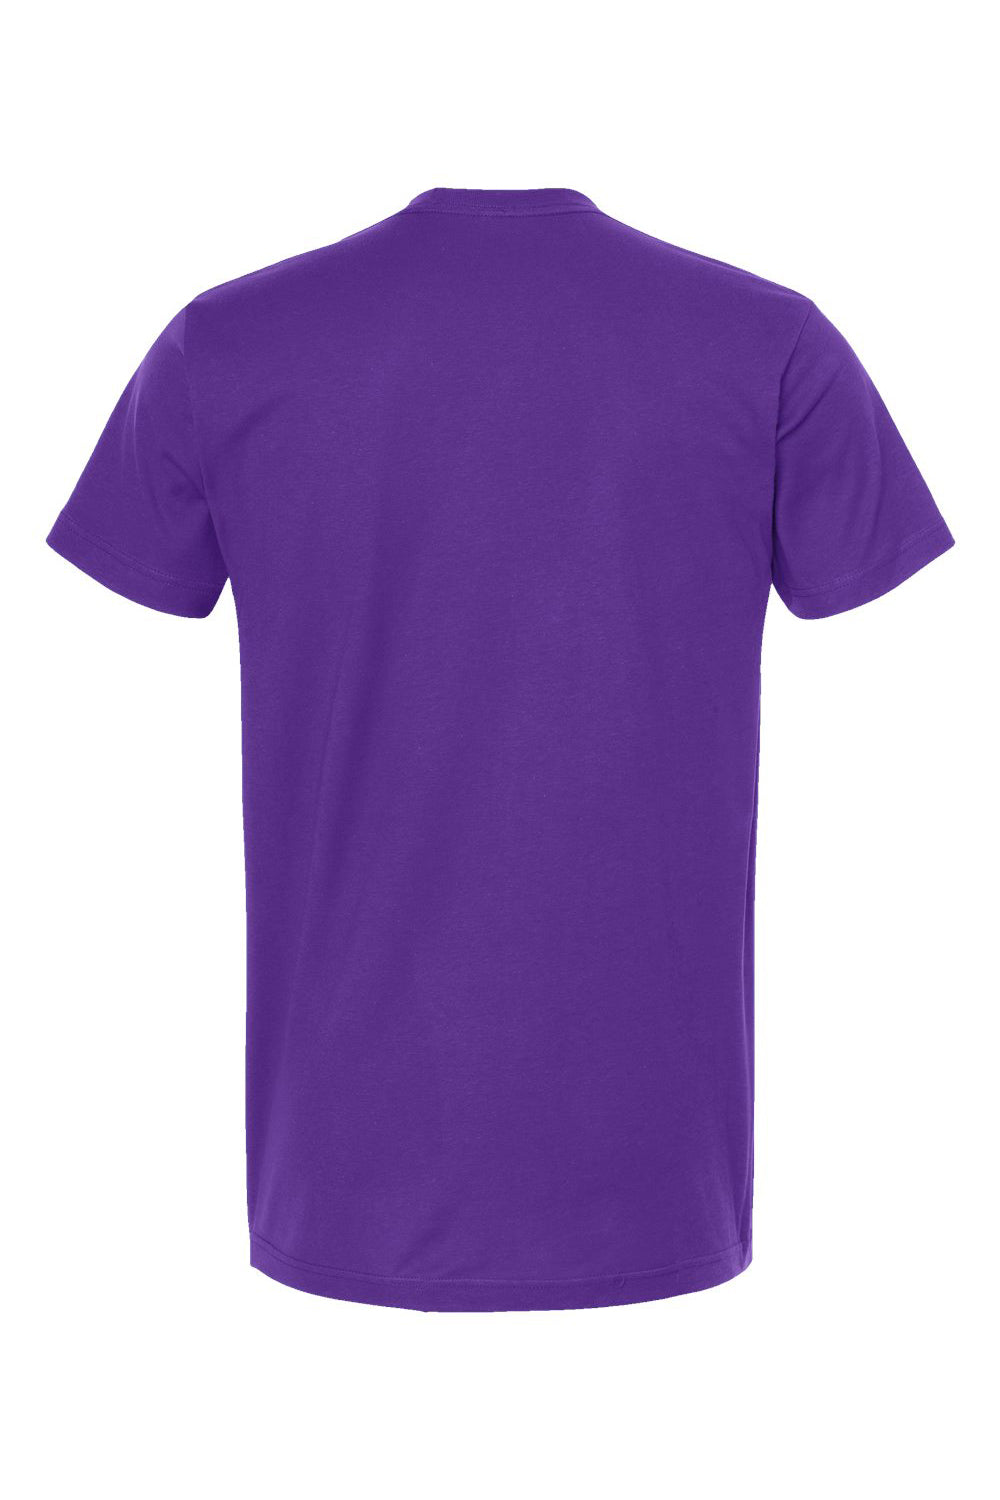 Tultex 202 Mens Fine Jersey Short Sleeve Crewneck T-Shirt Purple Flat Back